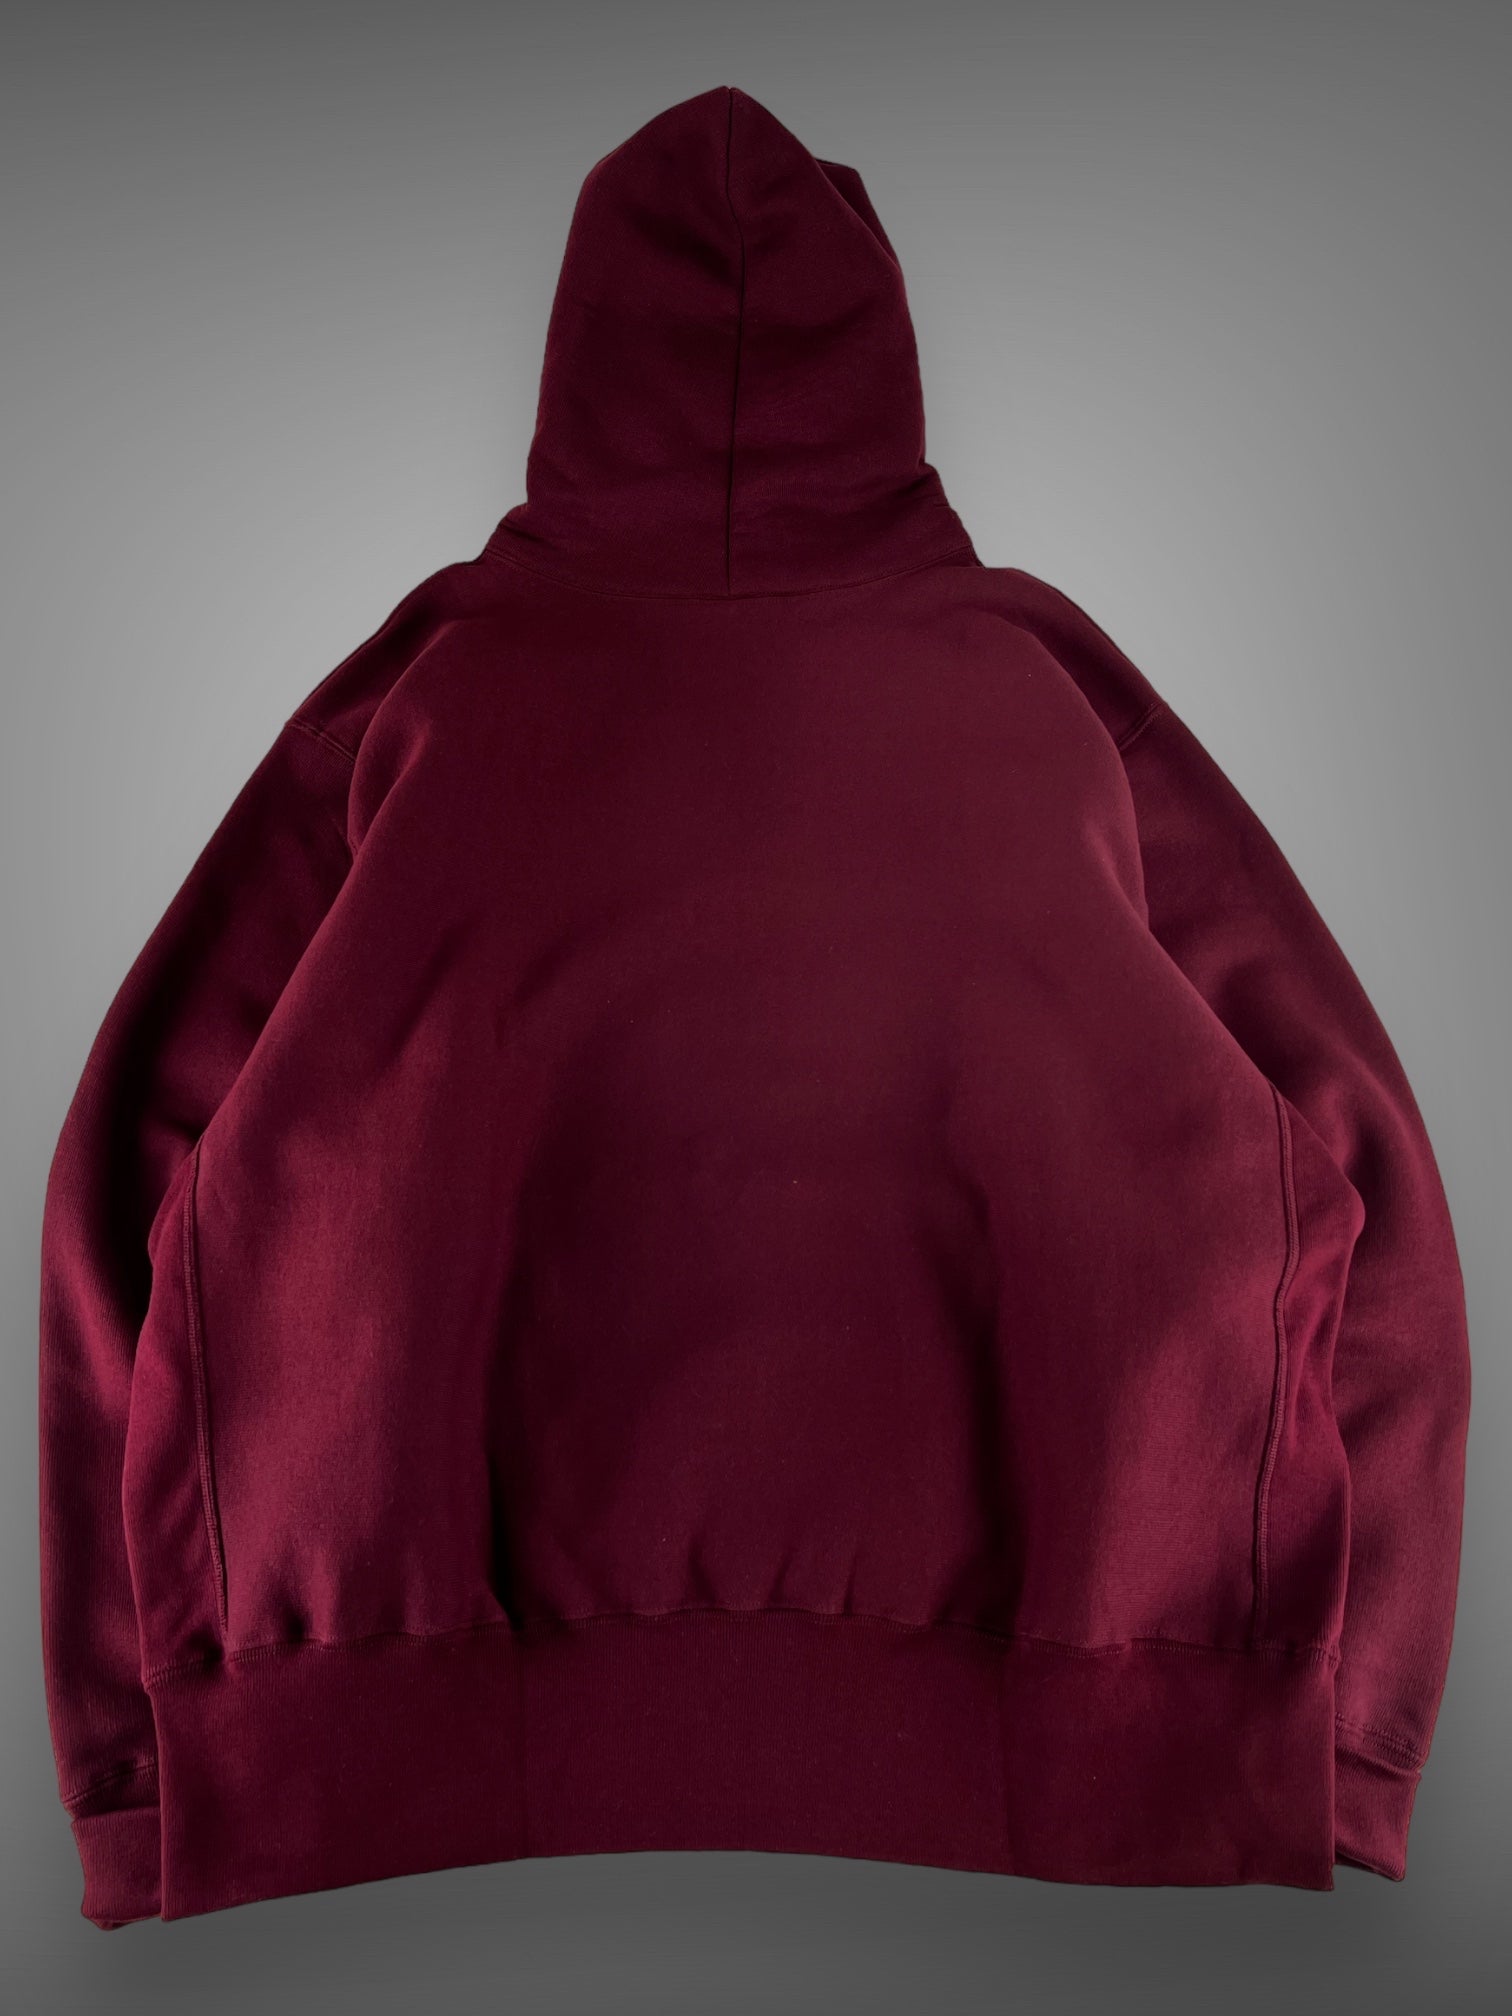 Deadstock Camber burgundy hooded sweatshirt XXL